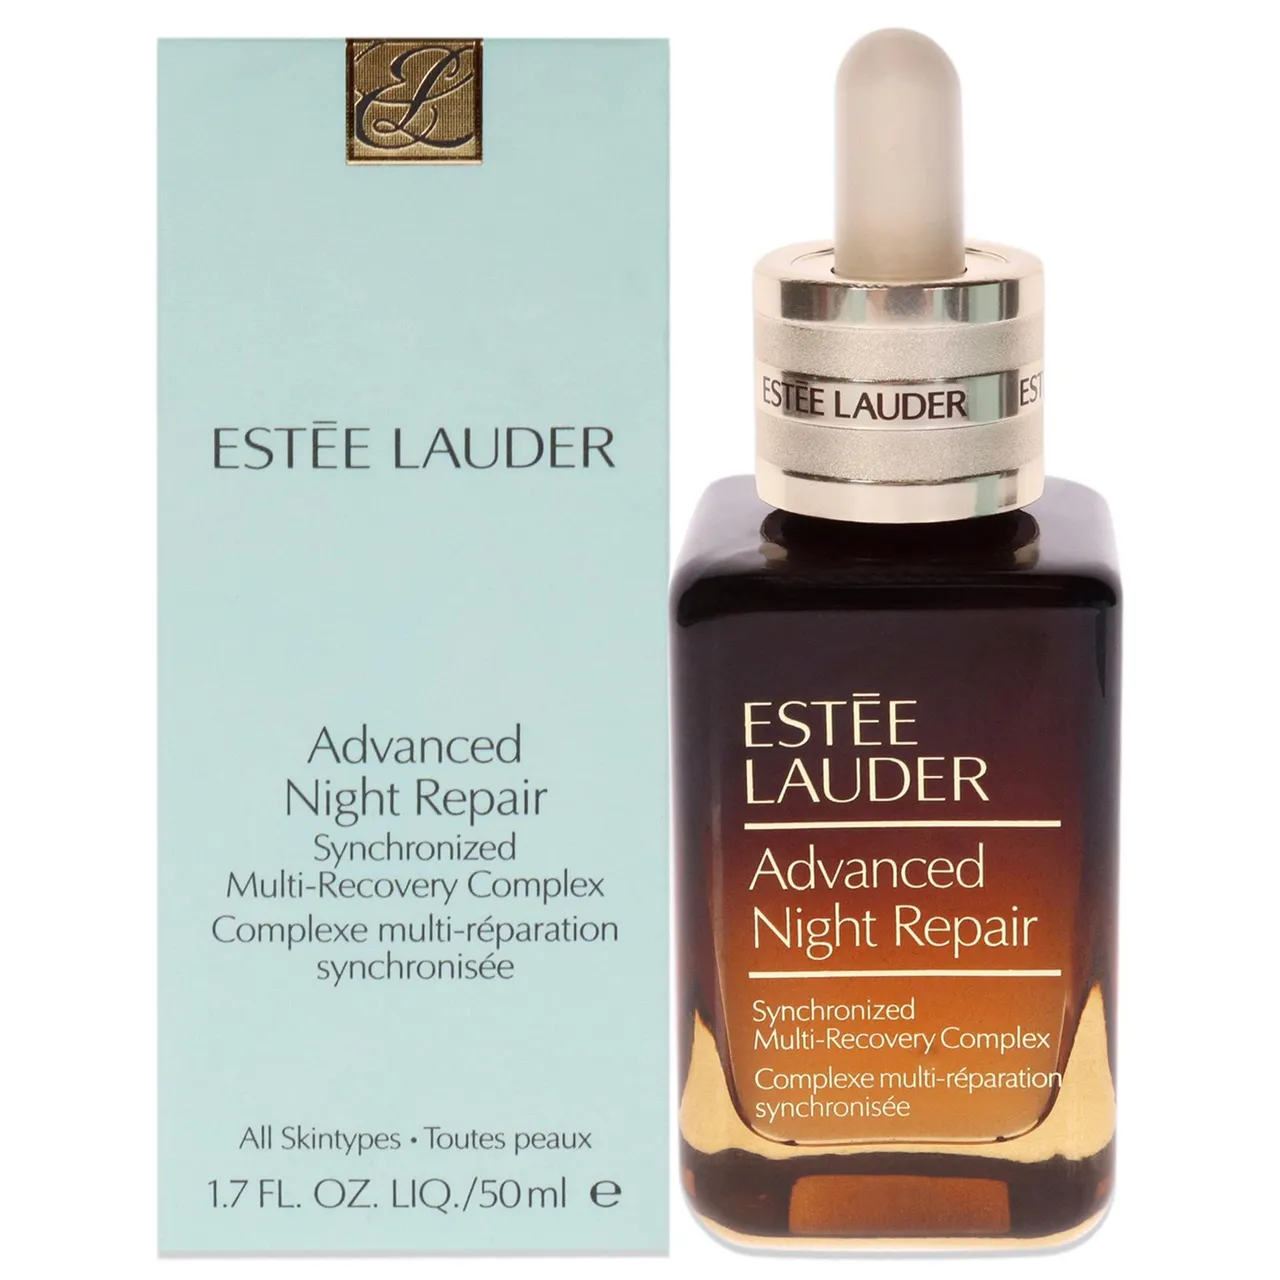 Advanced Night Repair by Estee Lauder Synchronized